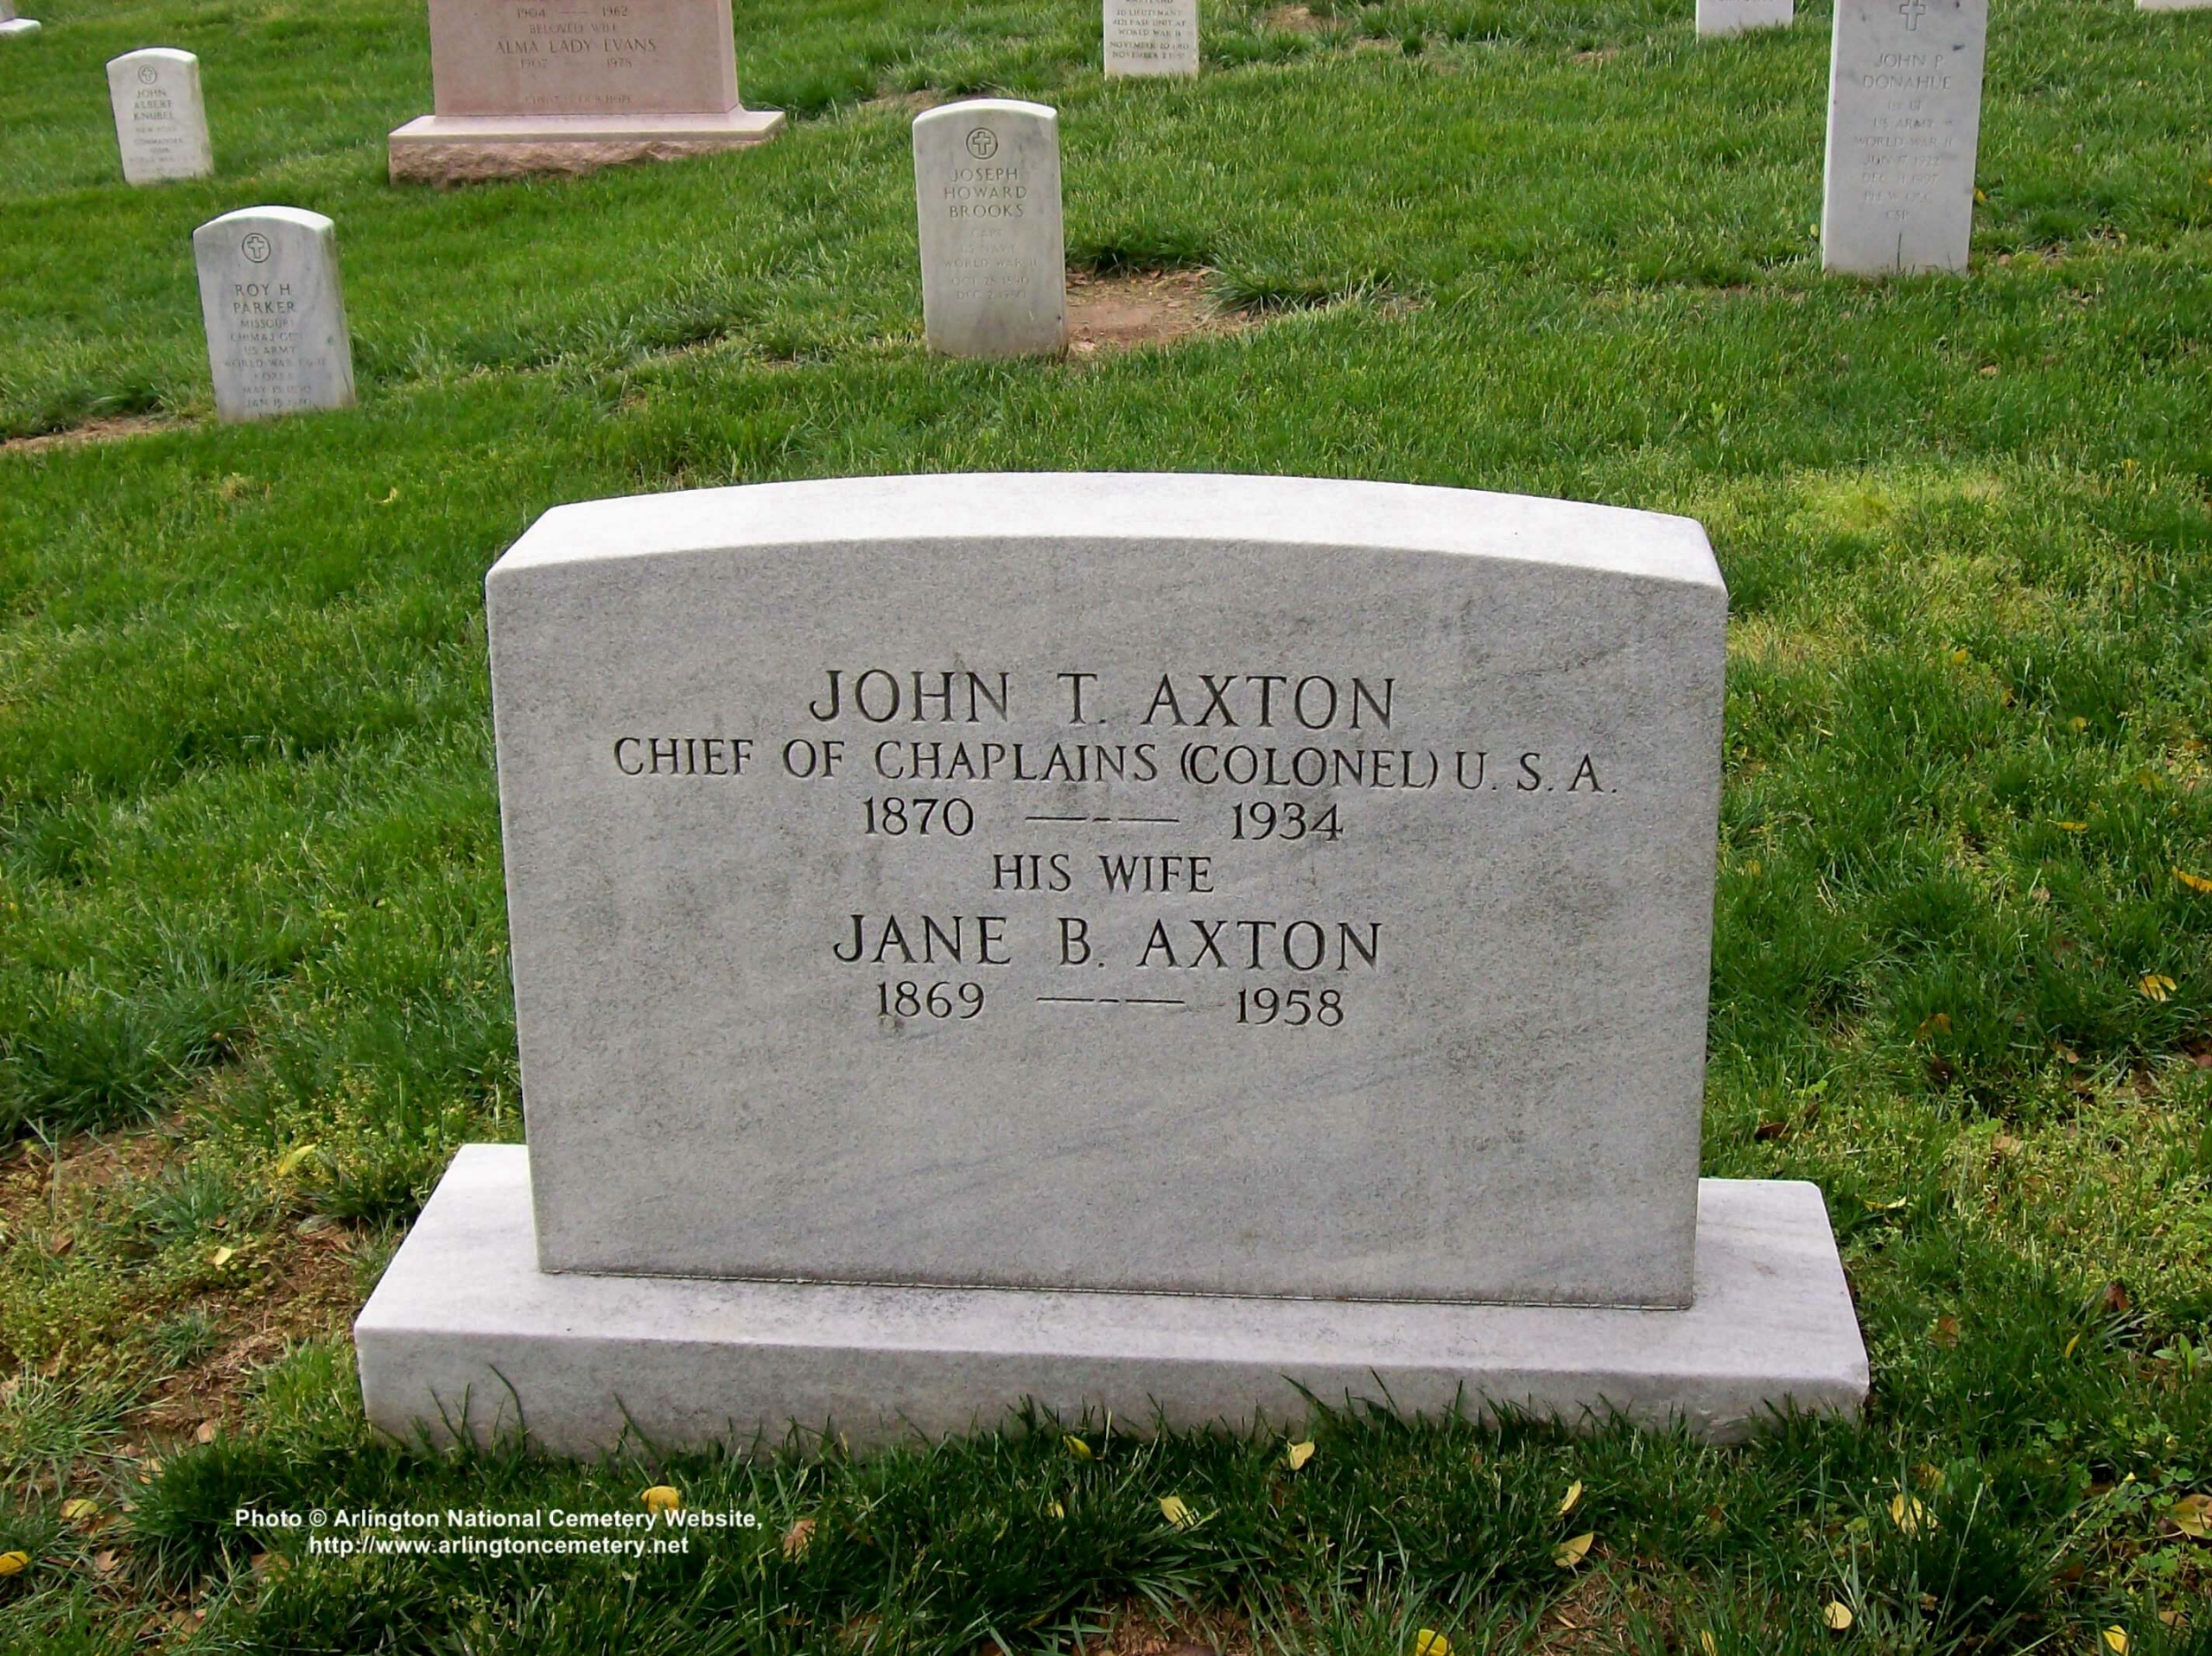 jtaxton-gravesite-photo-may-2008-001